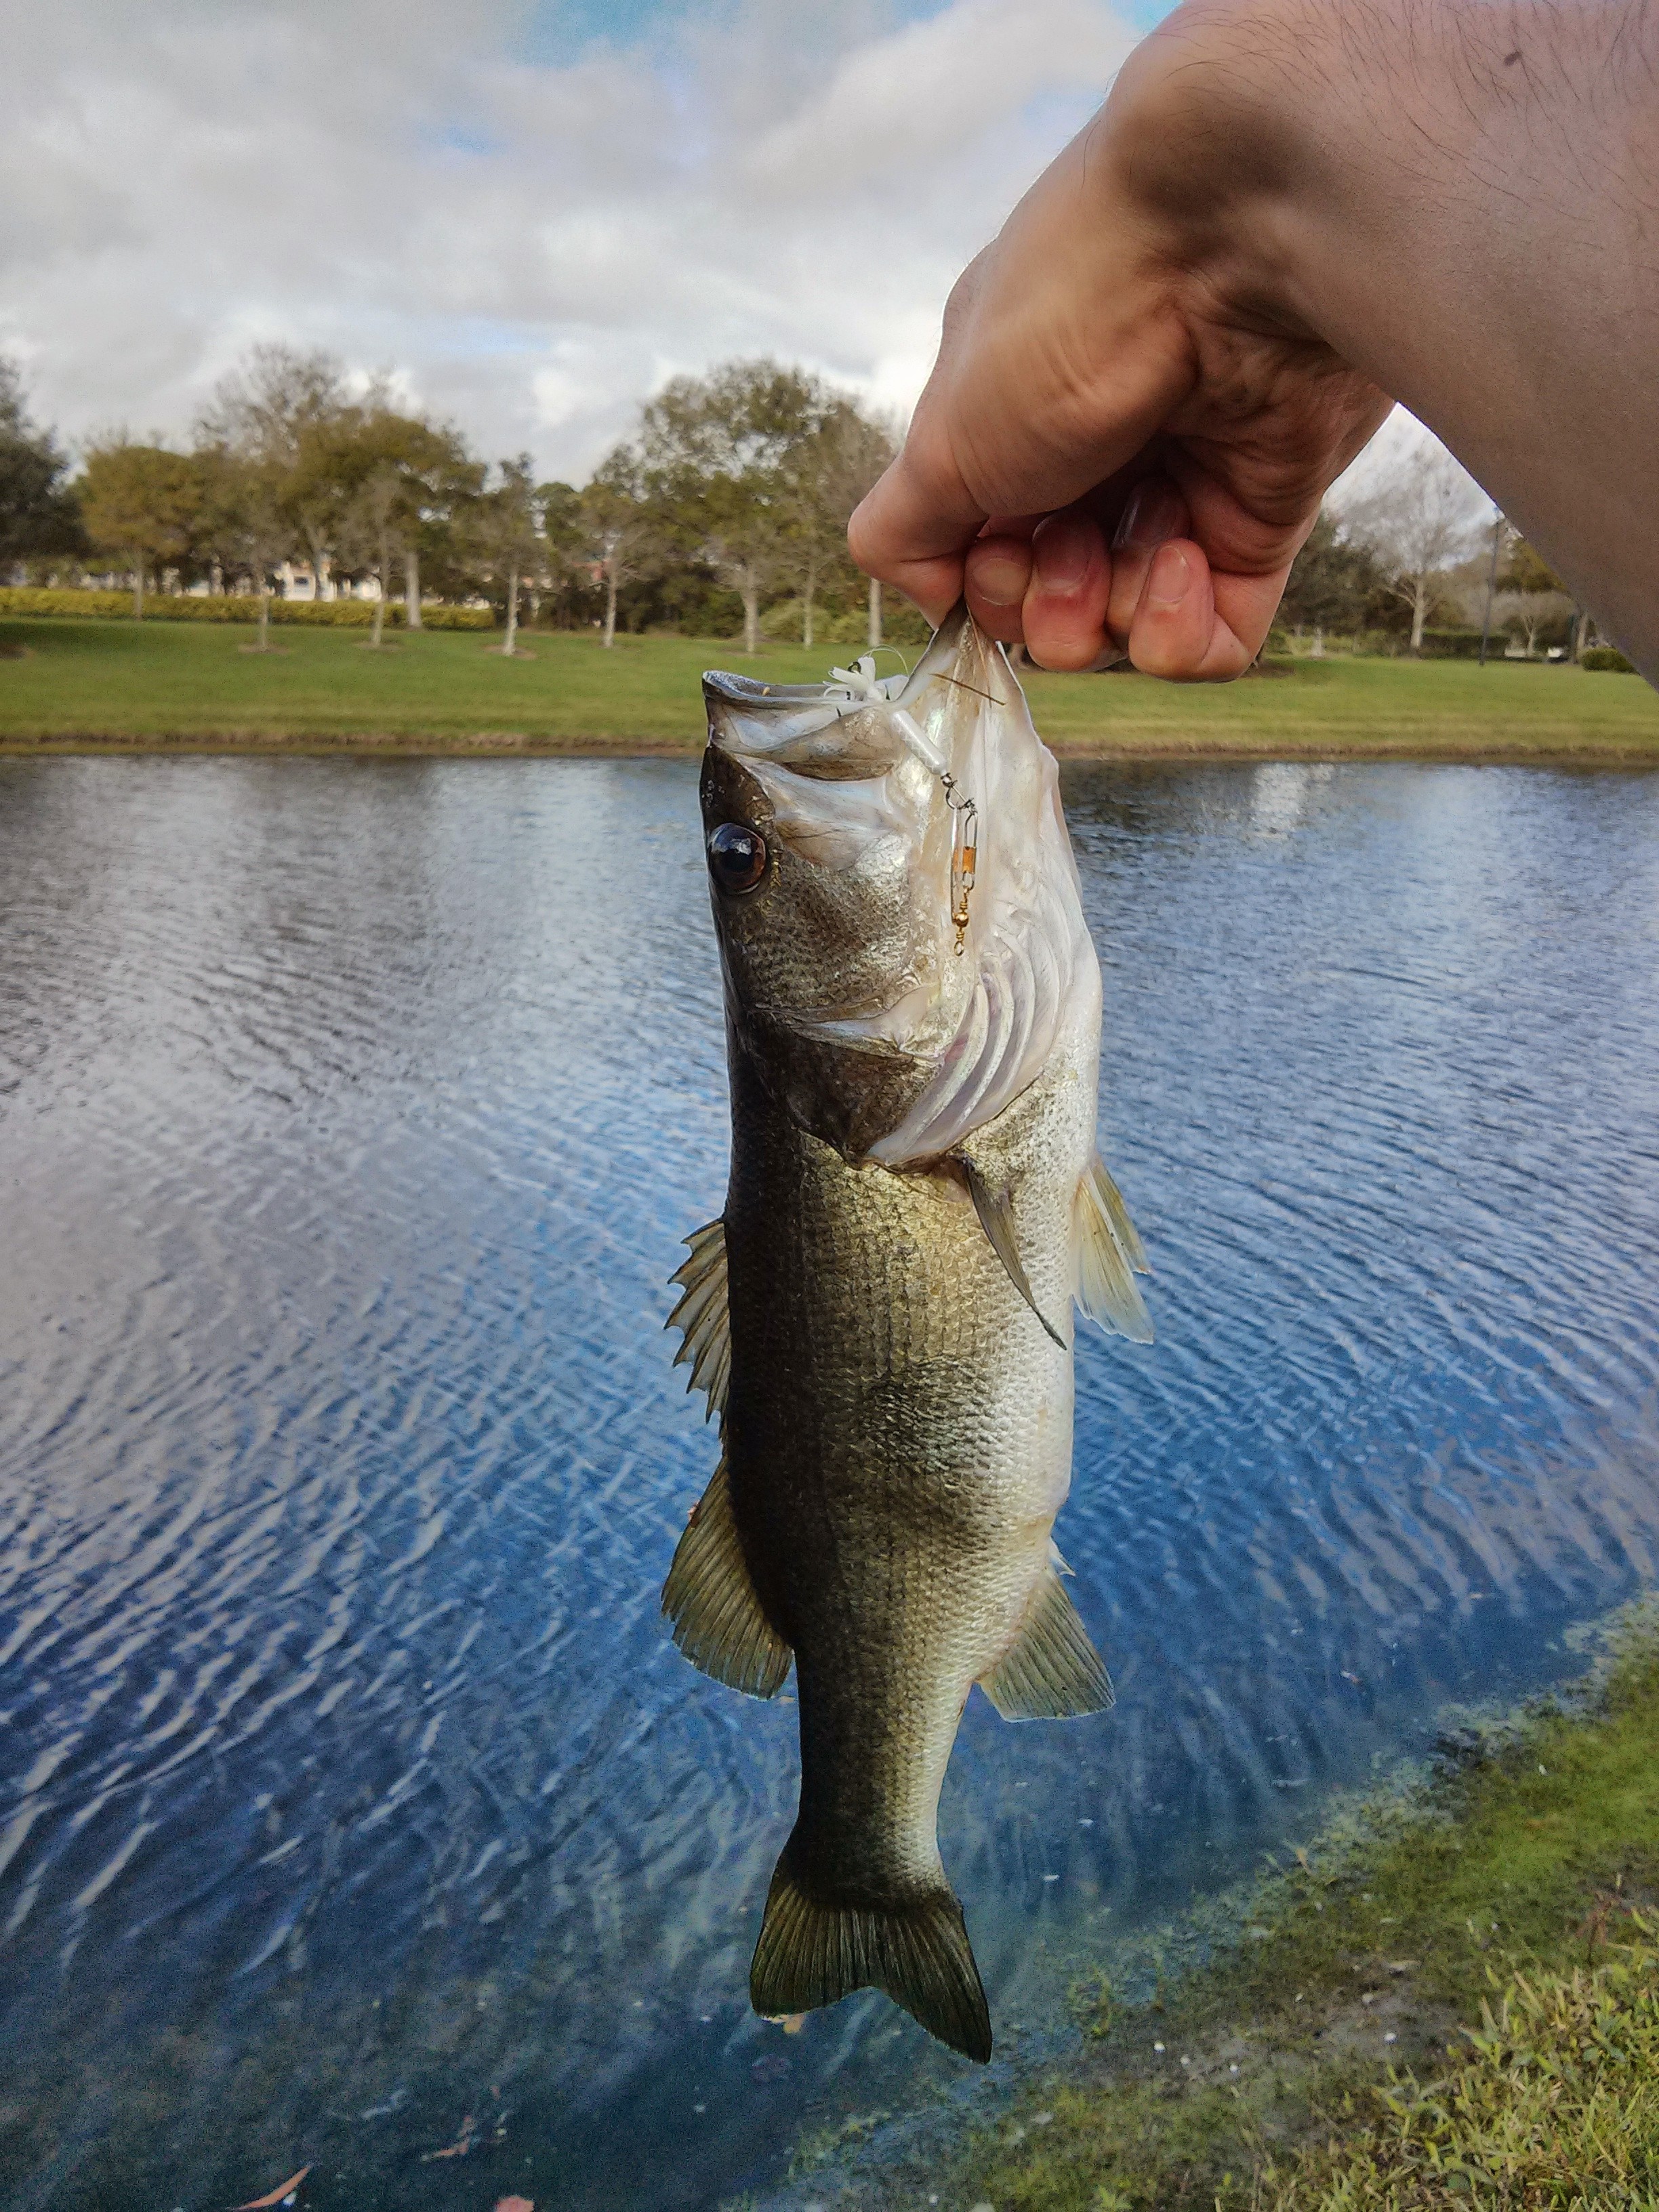 Catching a fish photo